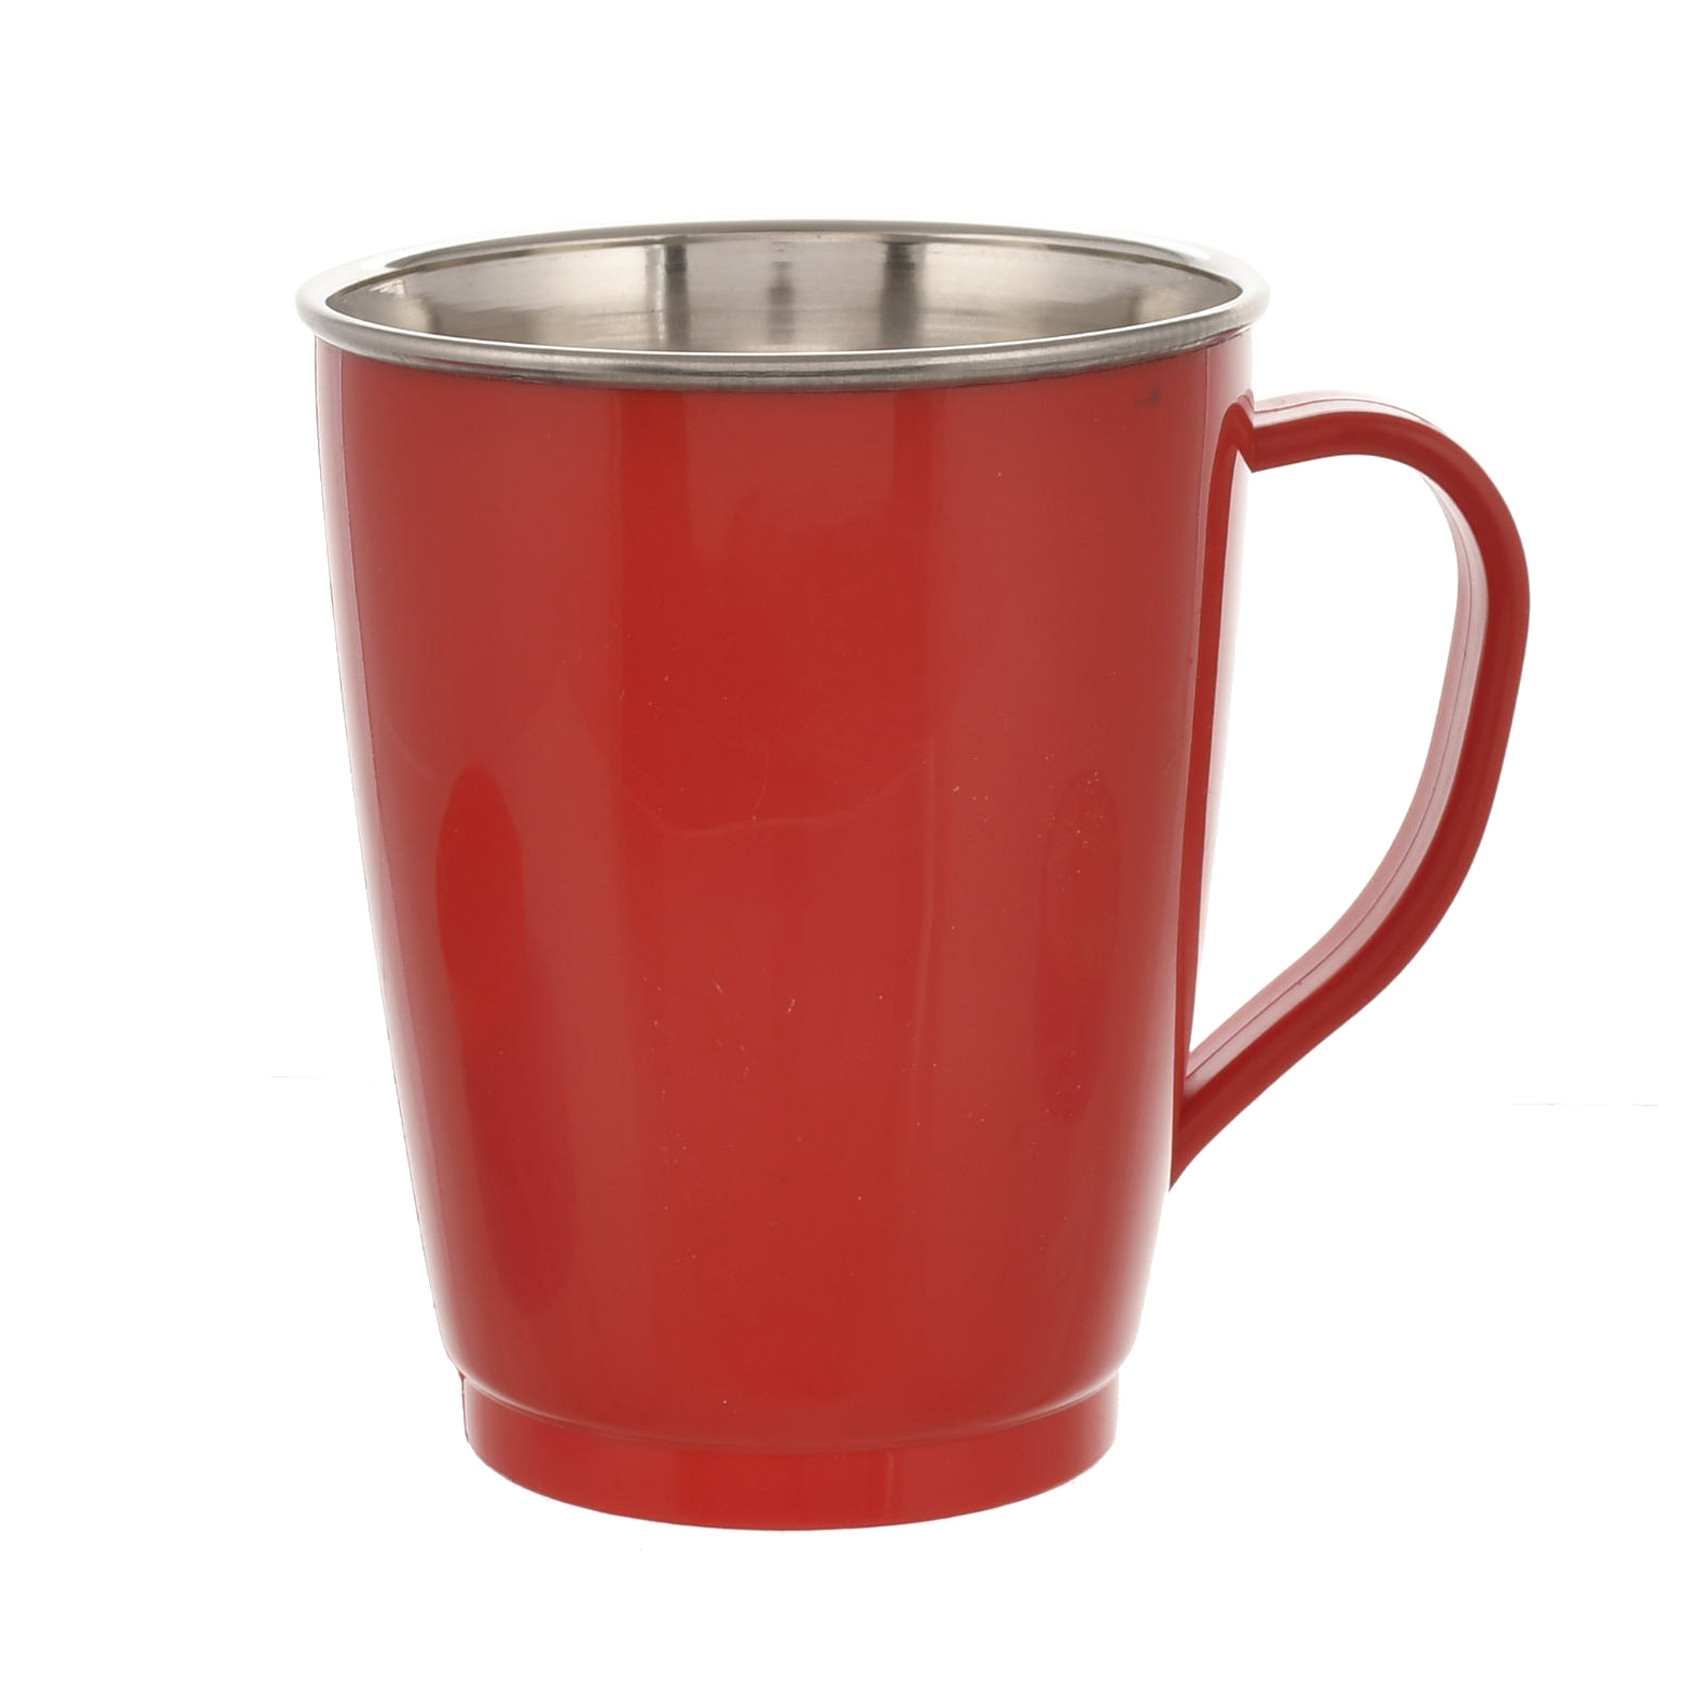 Kuber Industries Disney Printed Food Grade BPA Free Tea/Coffee Mug for Coffee Tea Cocoa, Camping Mugs with Lid, Pack of 6 (Red & Cream)